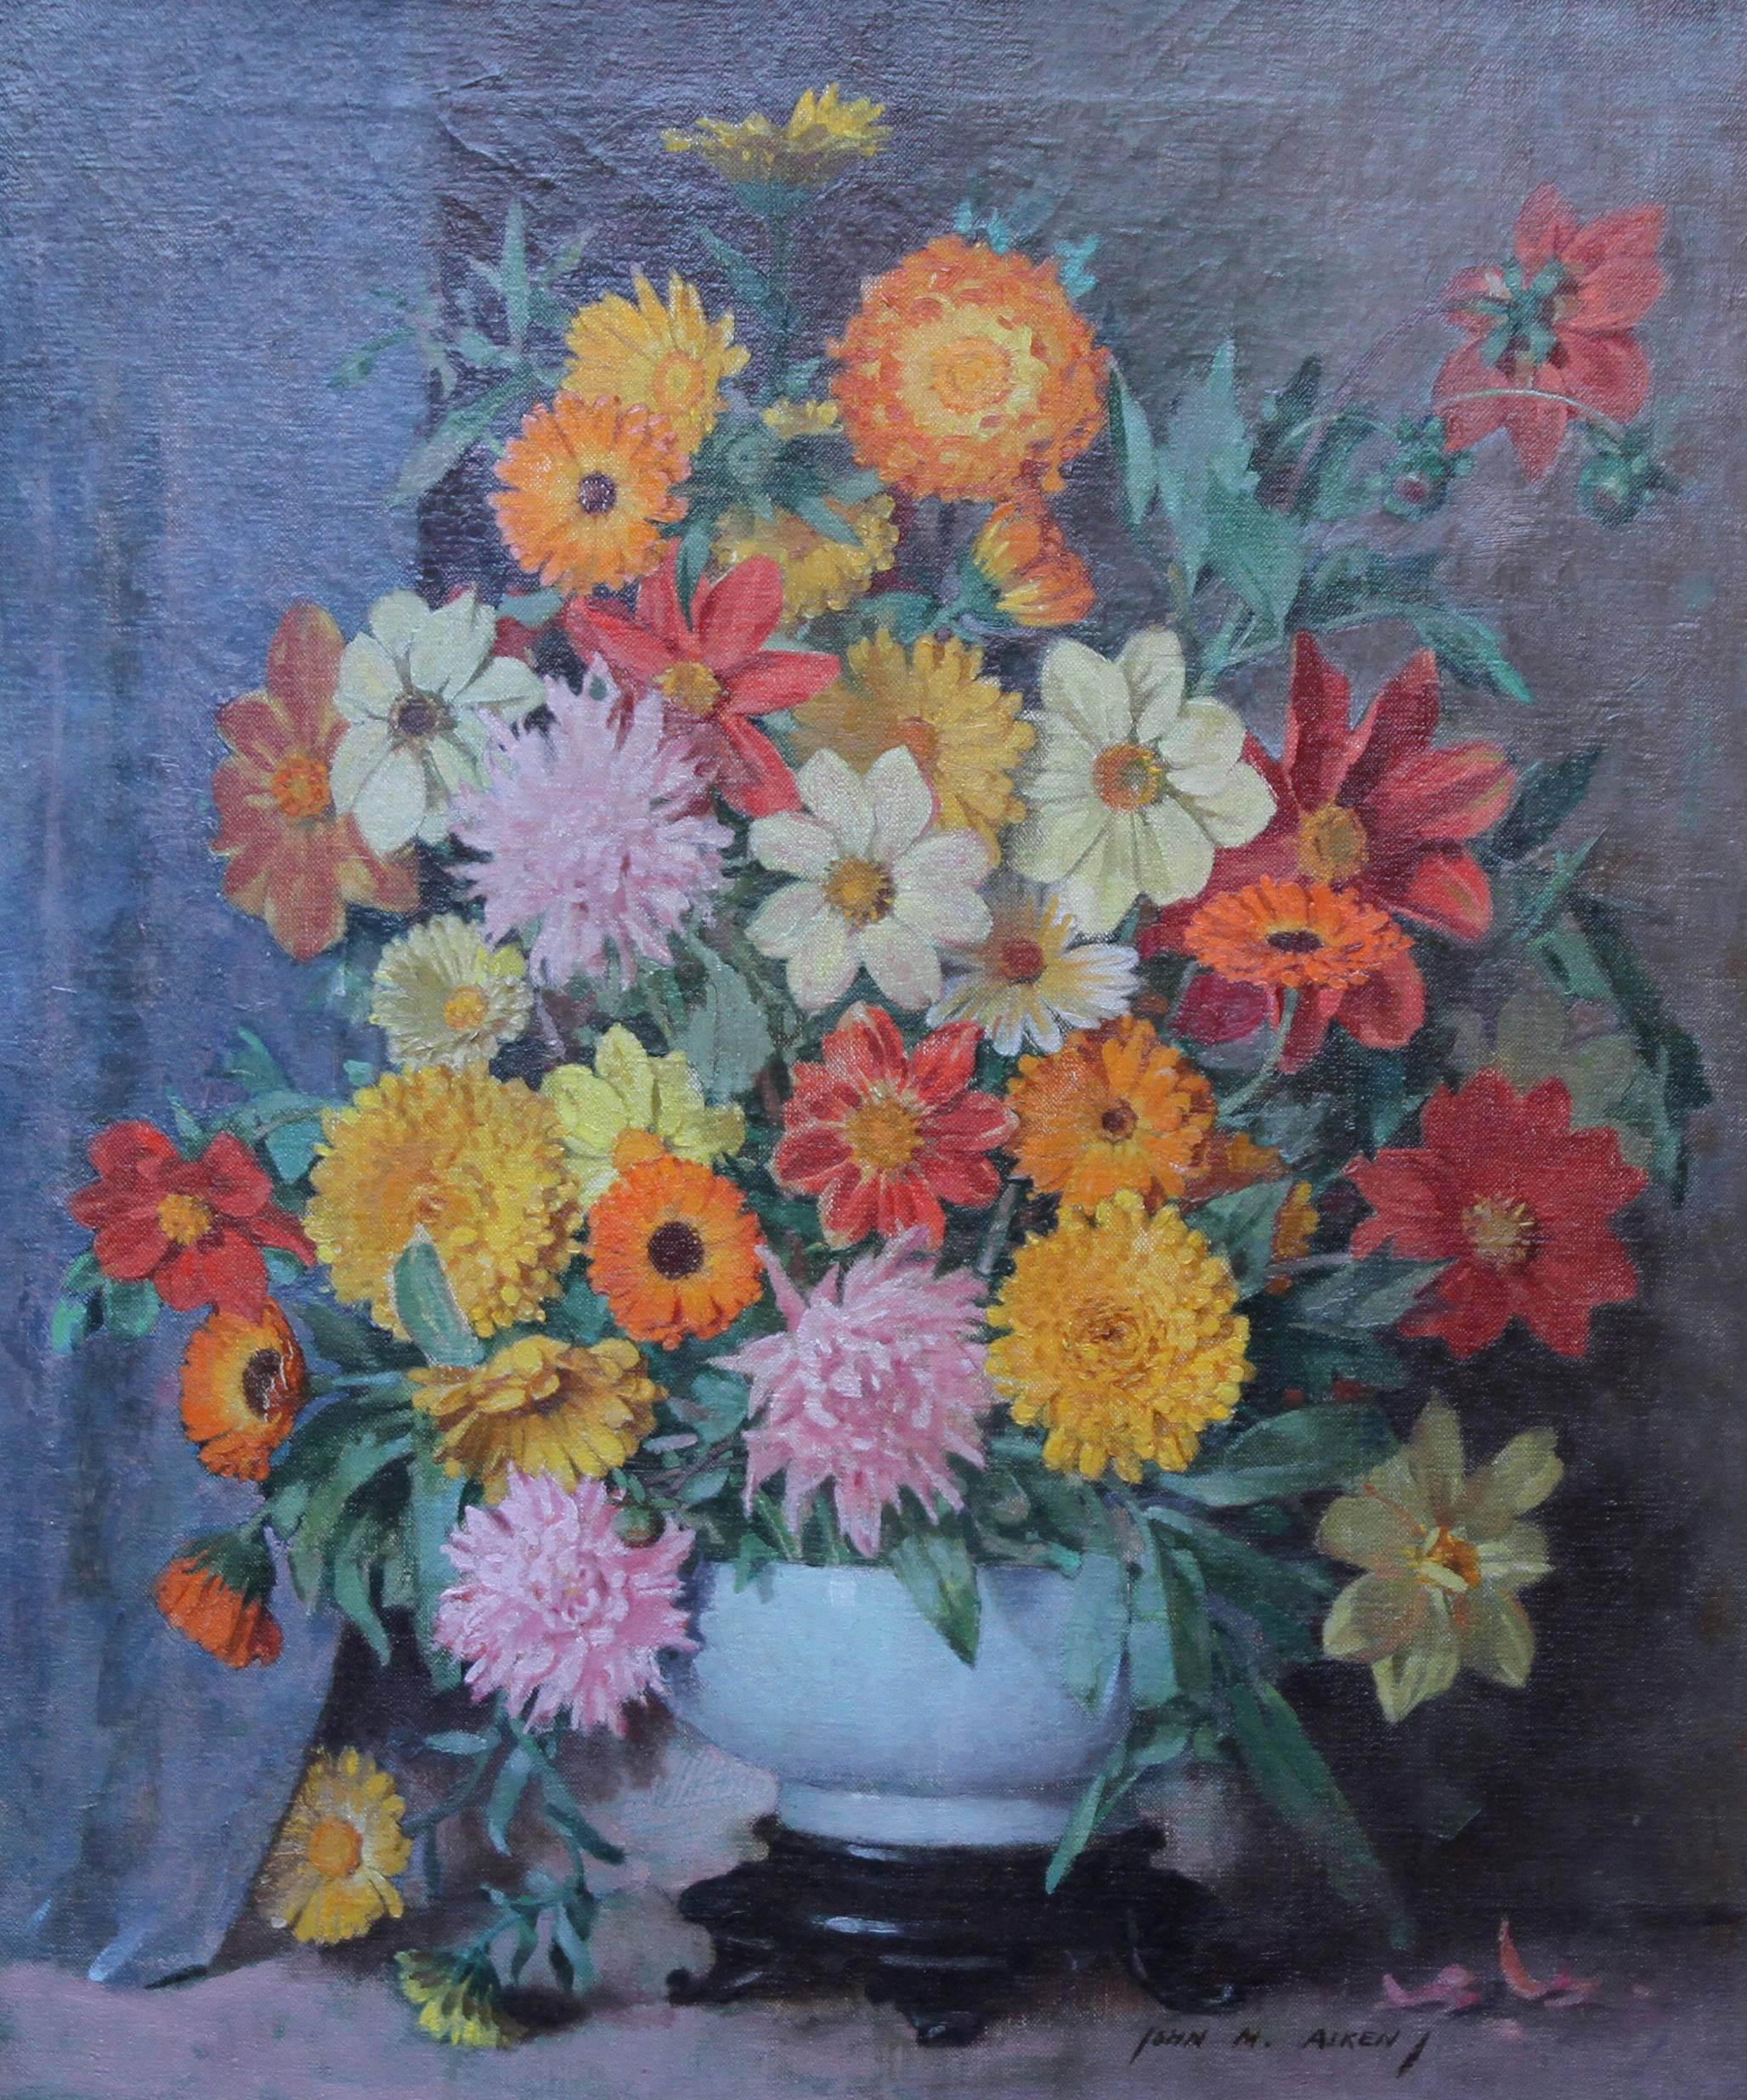 Scottish Floral - Scottish art 1920's oil painting still life floral arangement - Painting by John Aiken